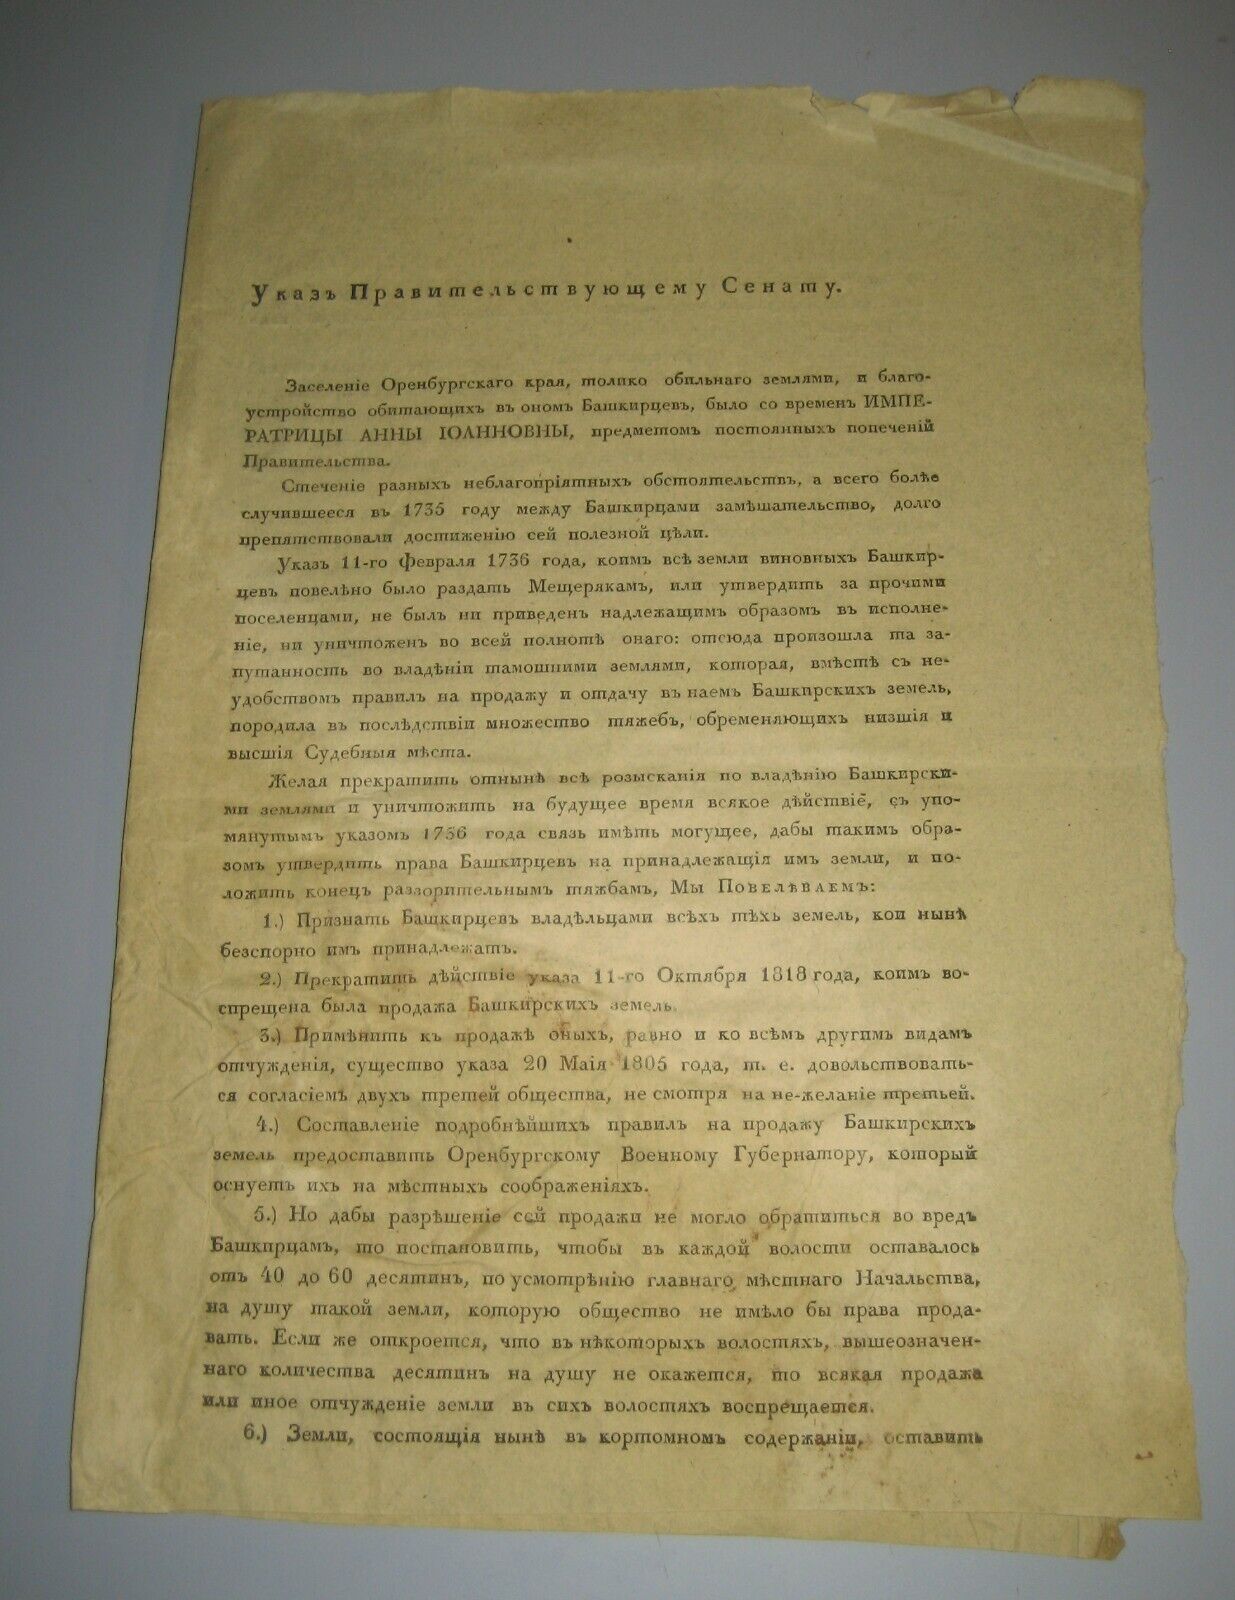 Decree to the governing senate Rusia Division of land Bashkiria 1832